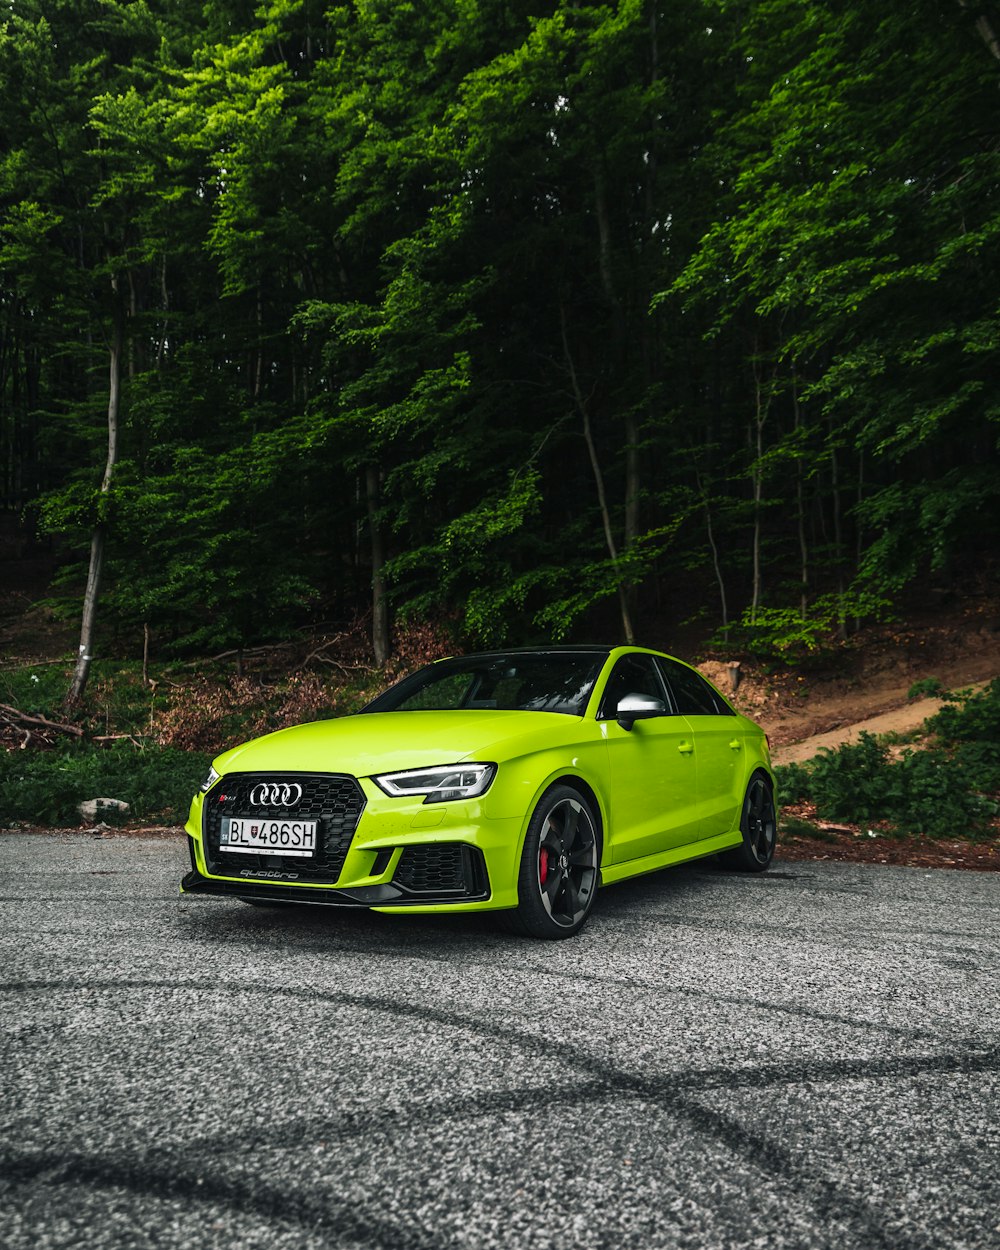 Grünes Audi Coupé tagsüber unterwegs